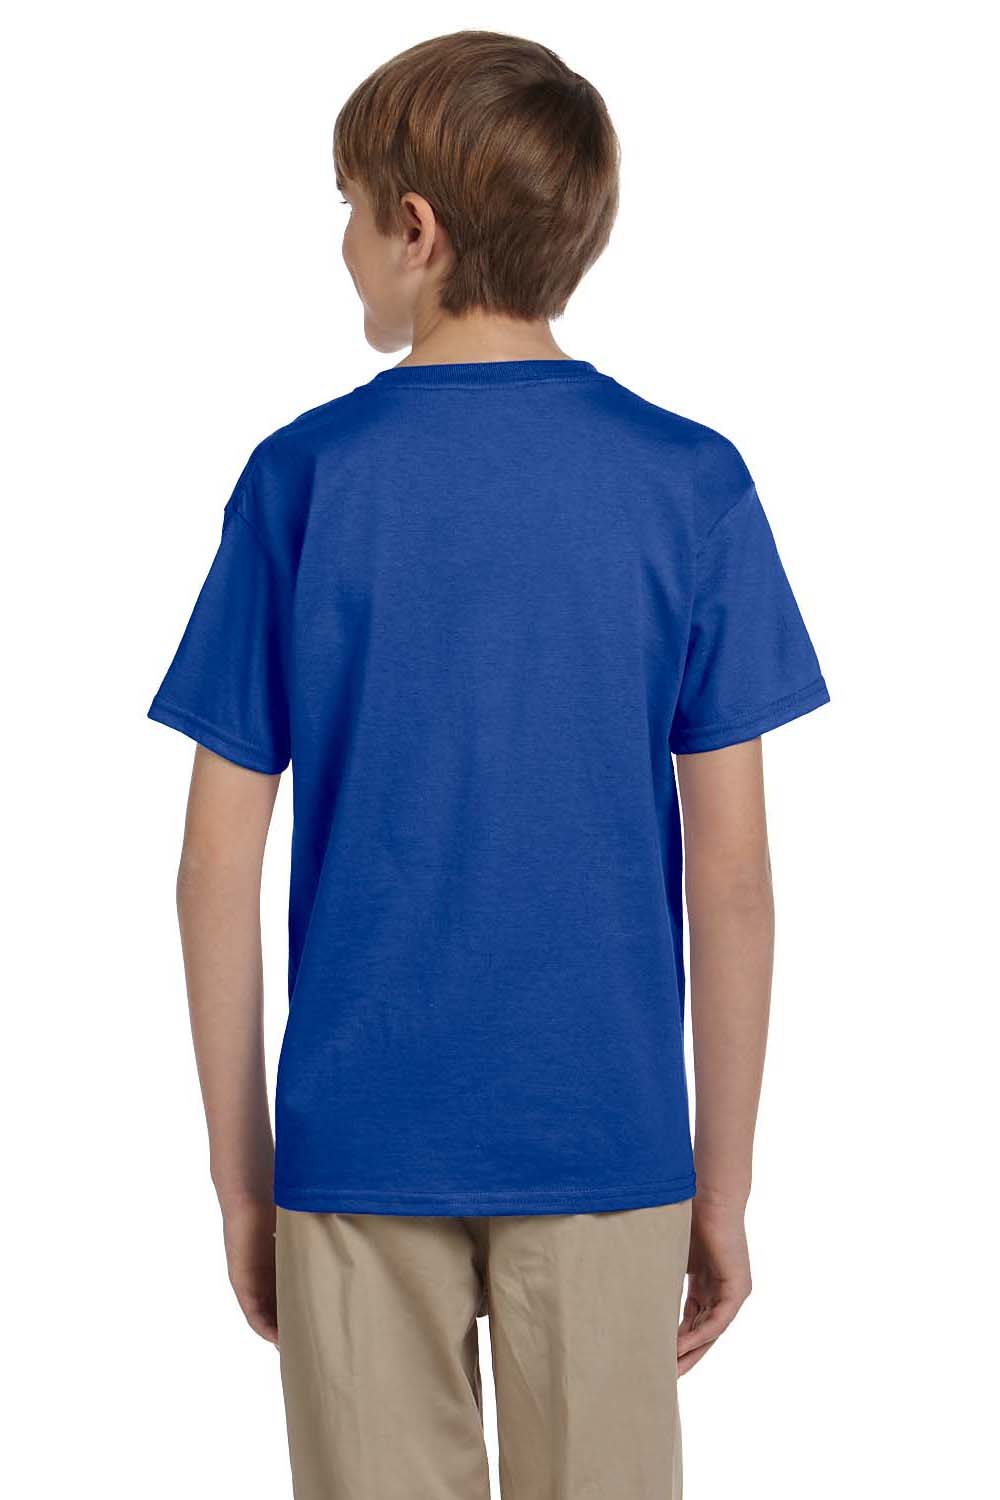 Hanes 5370 Youth EcoSmart Short Sleeve Crewneck T-Shirt Royal Blue Back